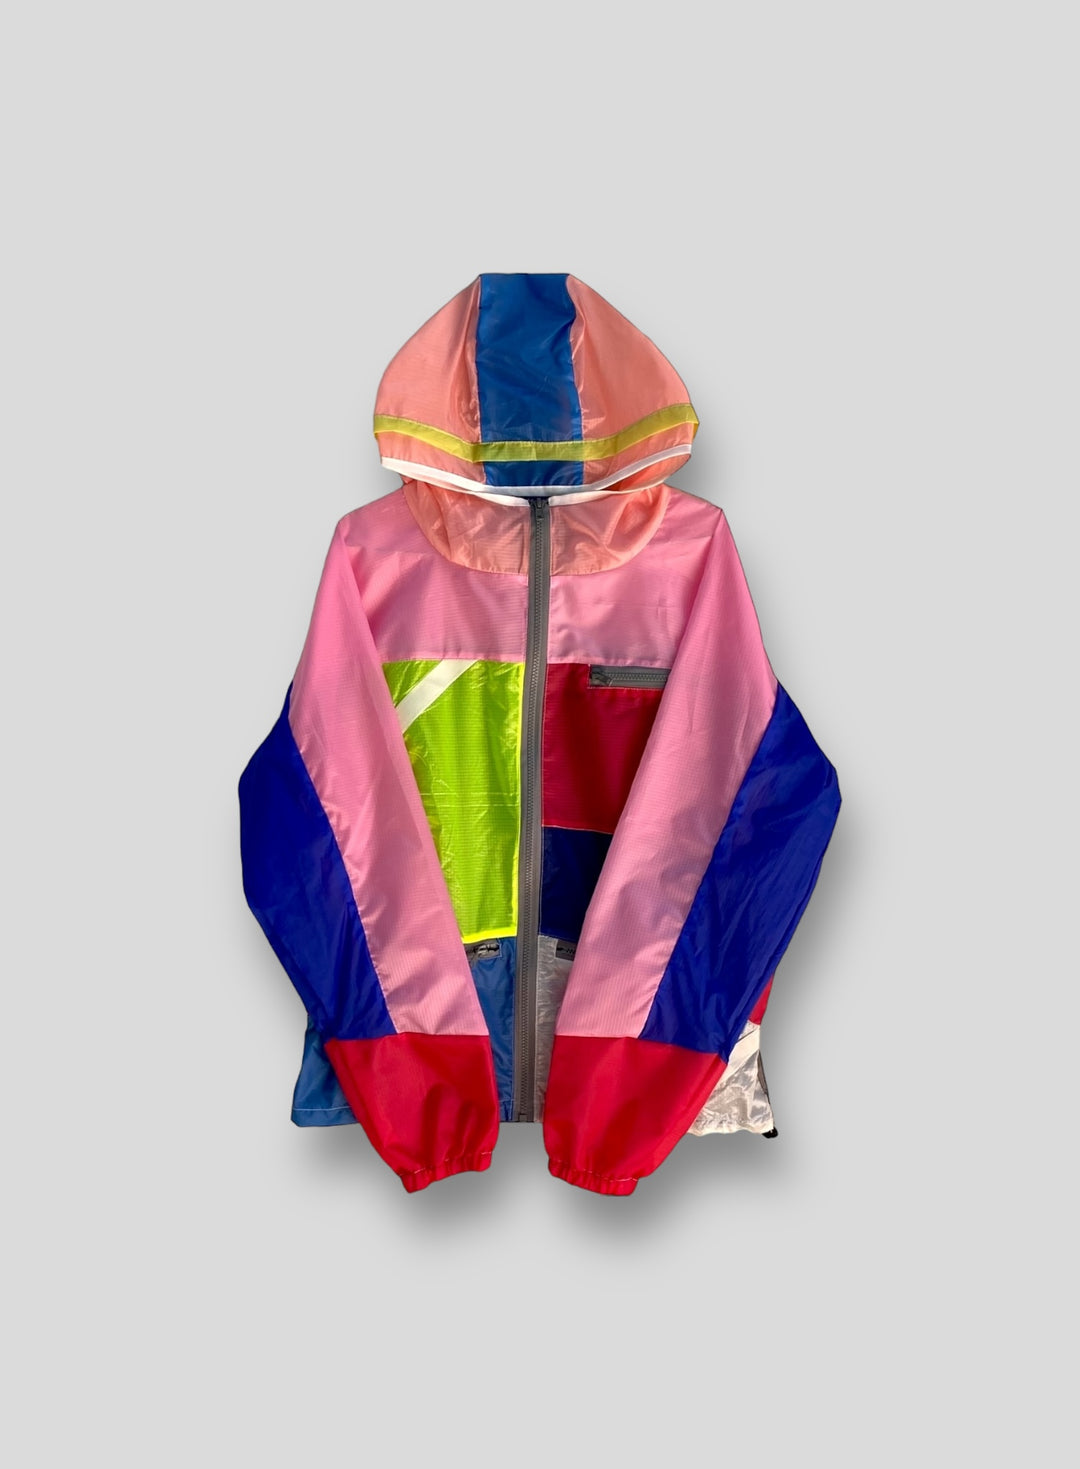 Upcycled Parachute Jacket (Small - D.48.23)